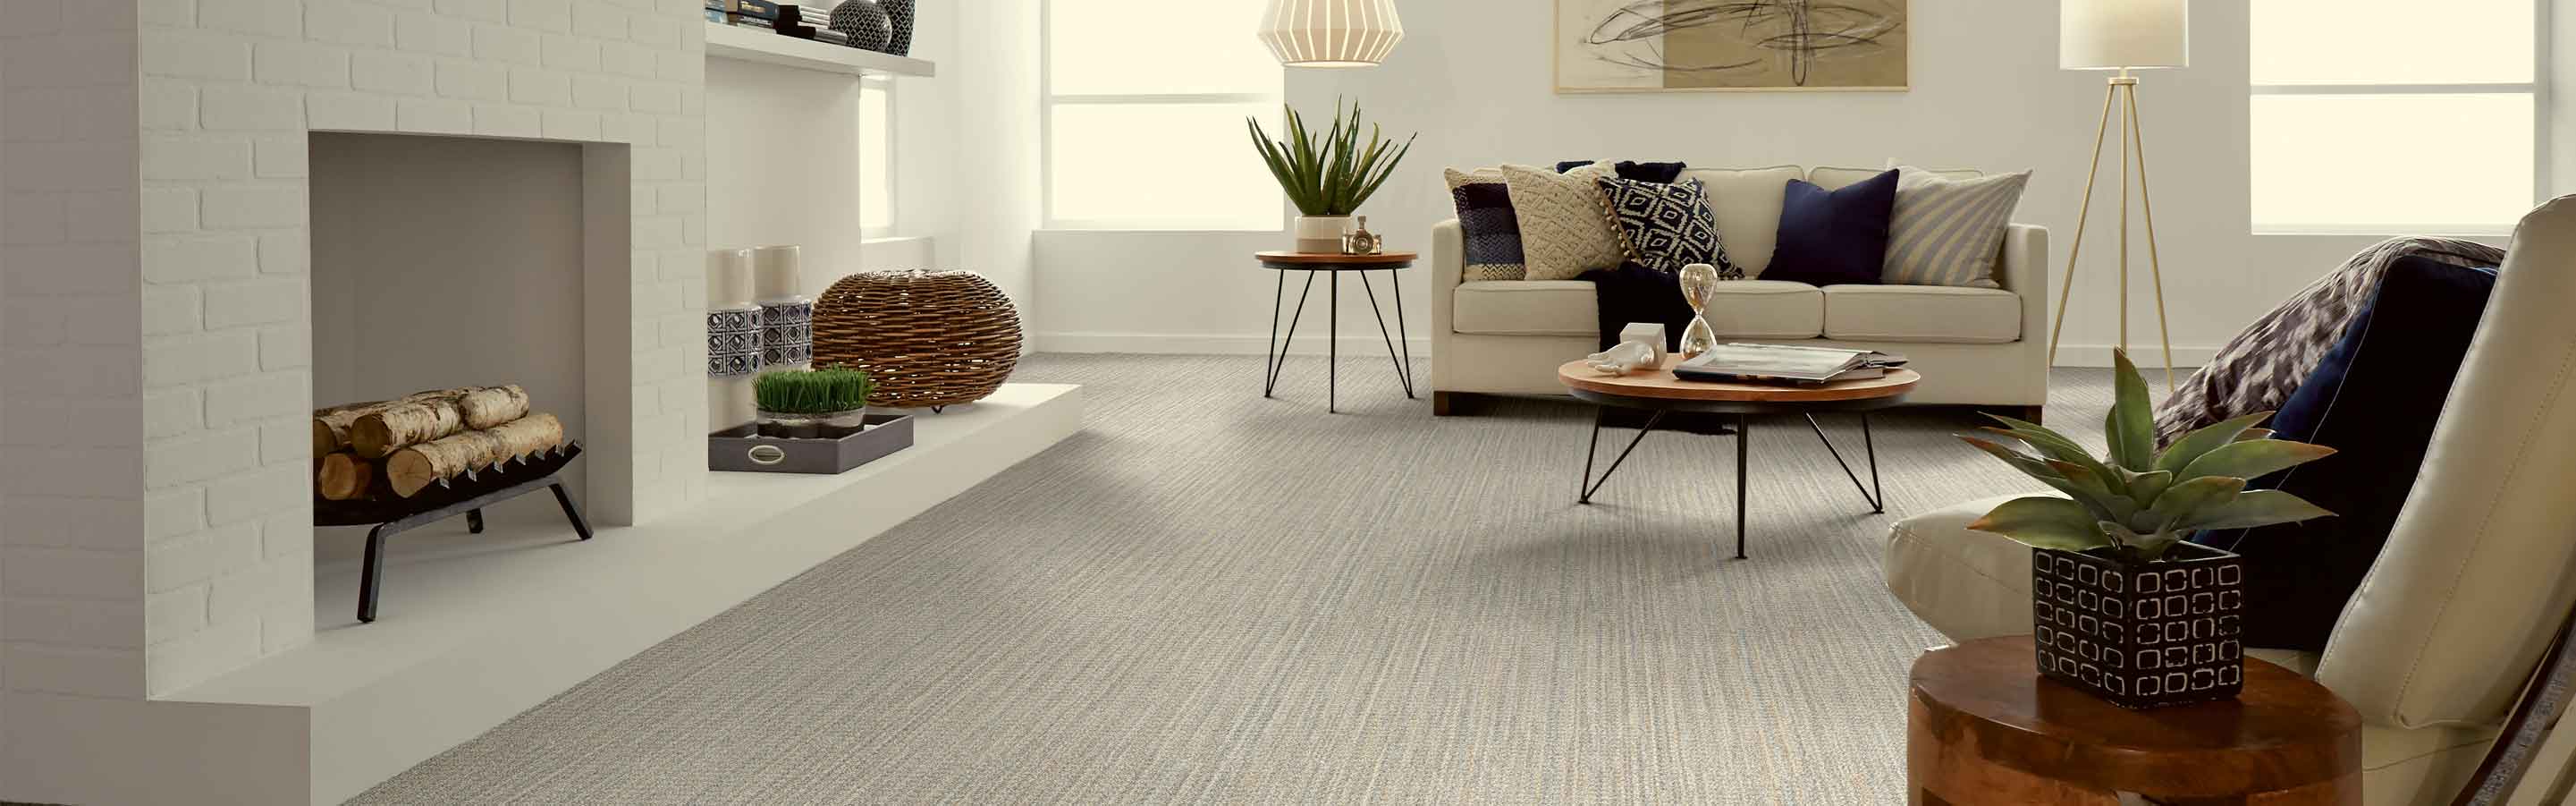 grey carpet in living room